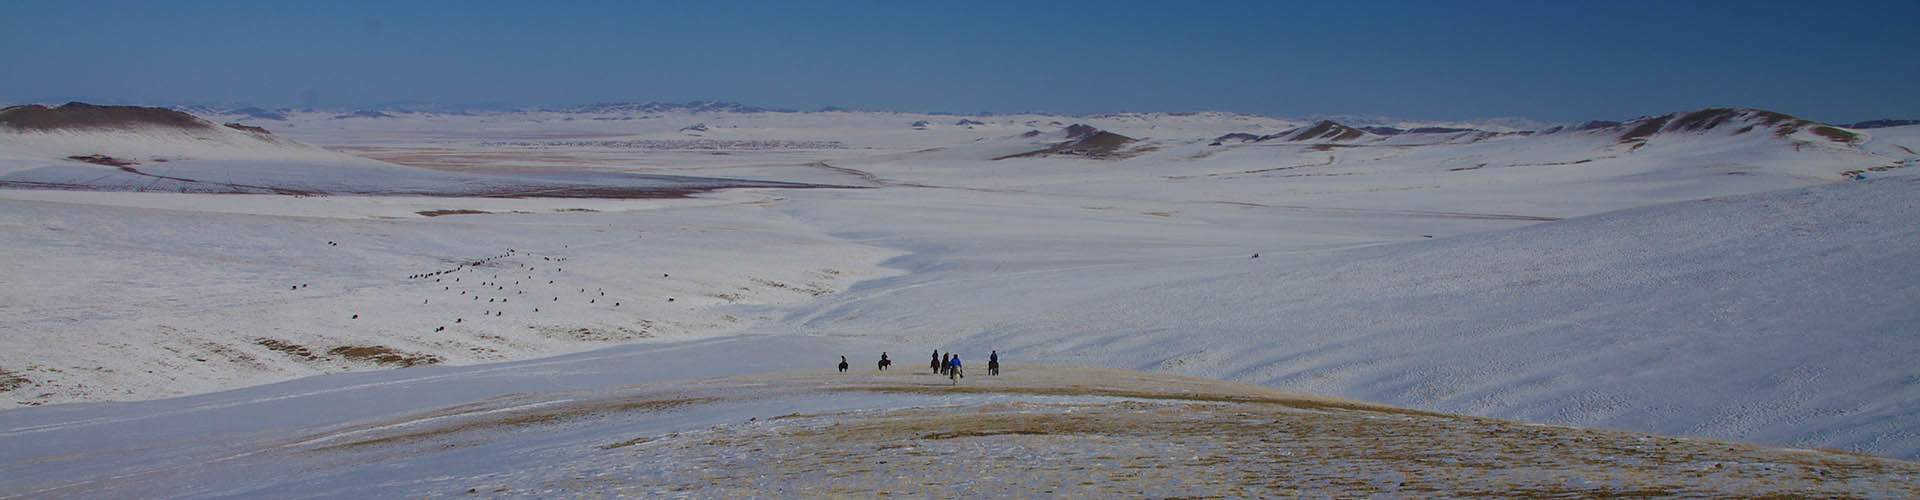 Mongolia Travel & Tours